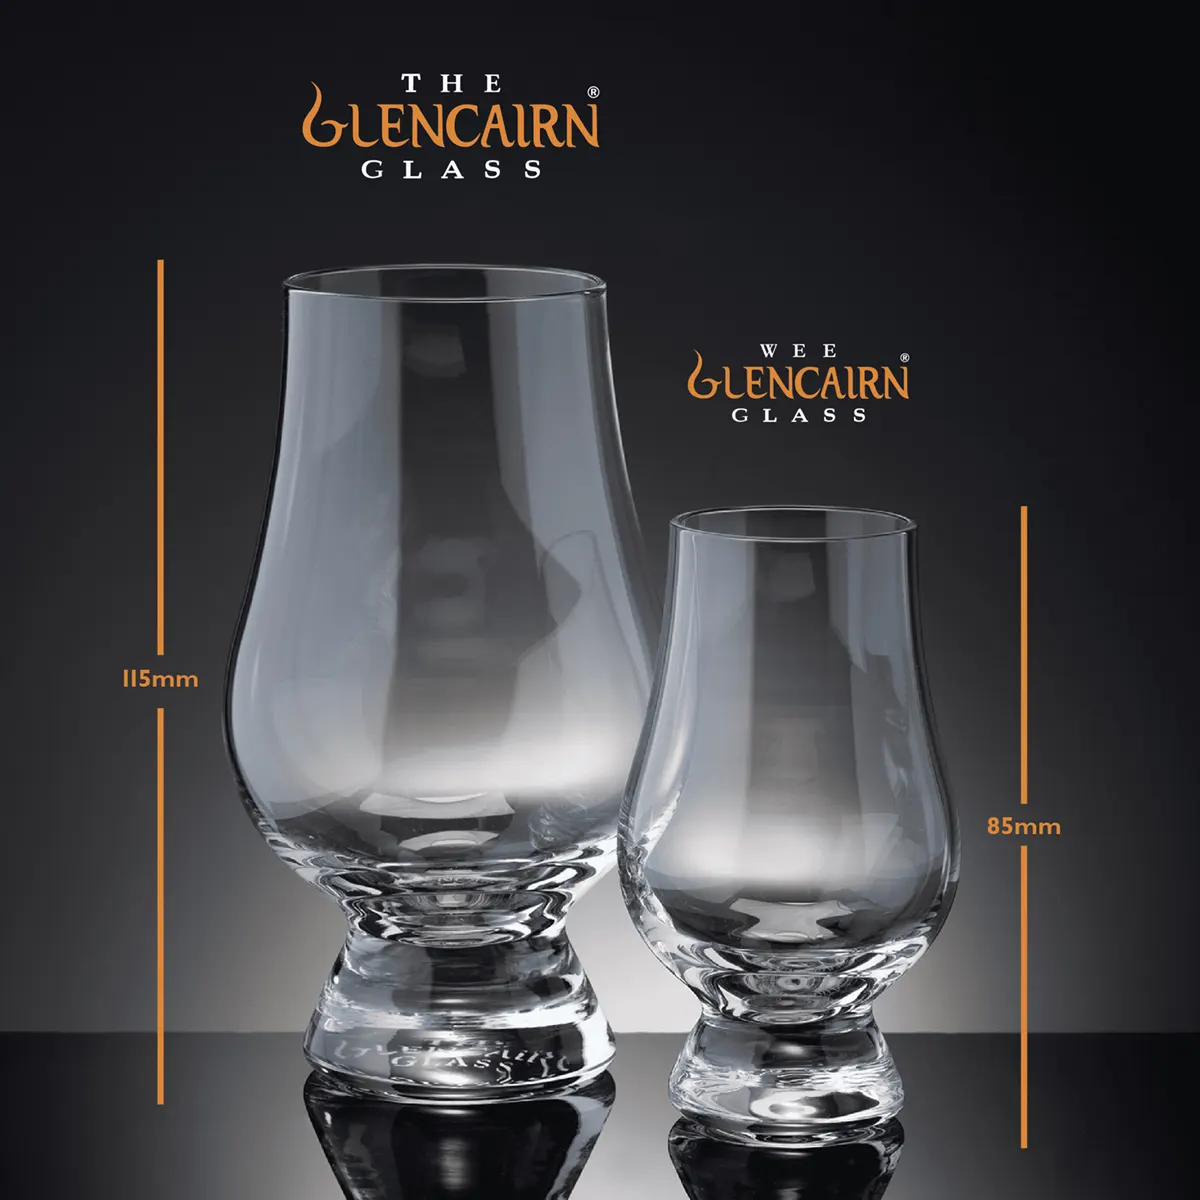 Wee Glencairn Glass - Mini Whisky Tasting Glas aus Schottland